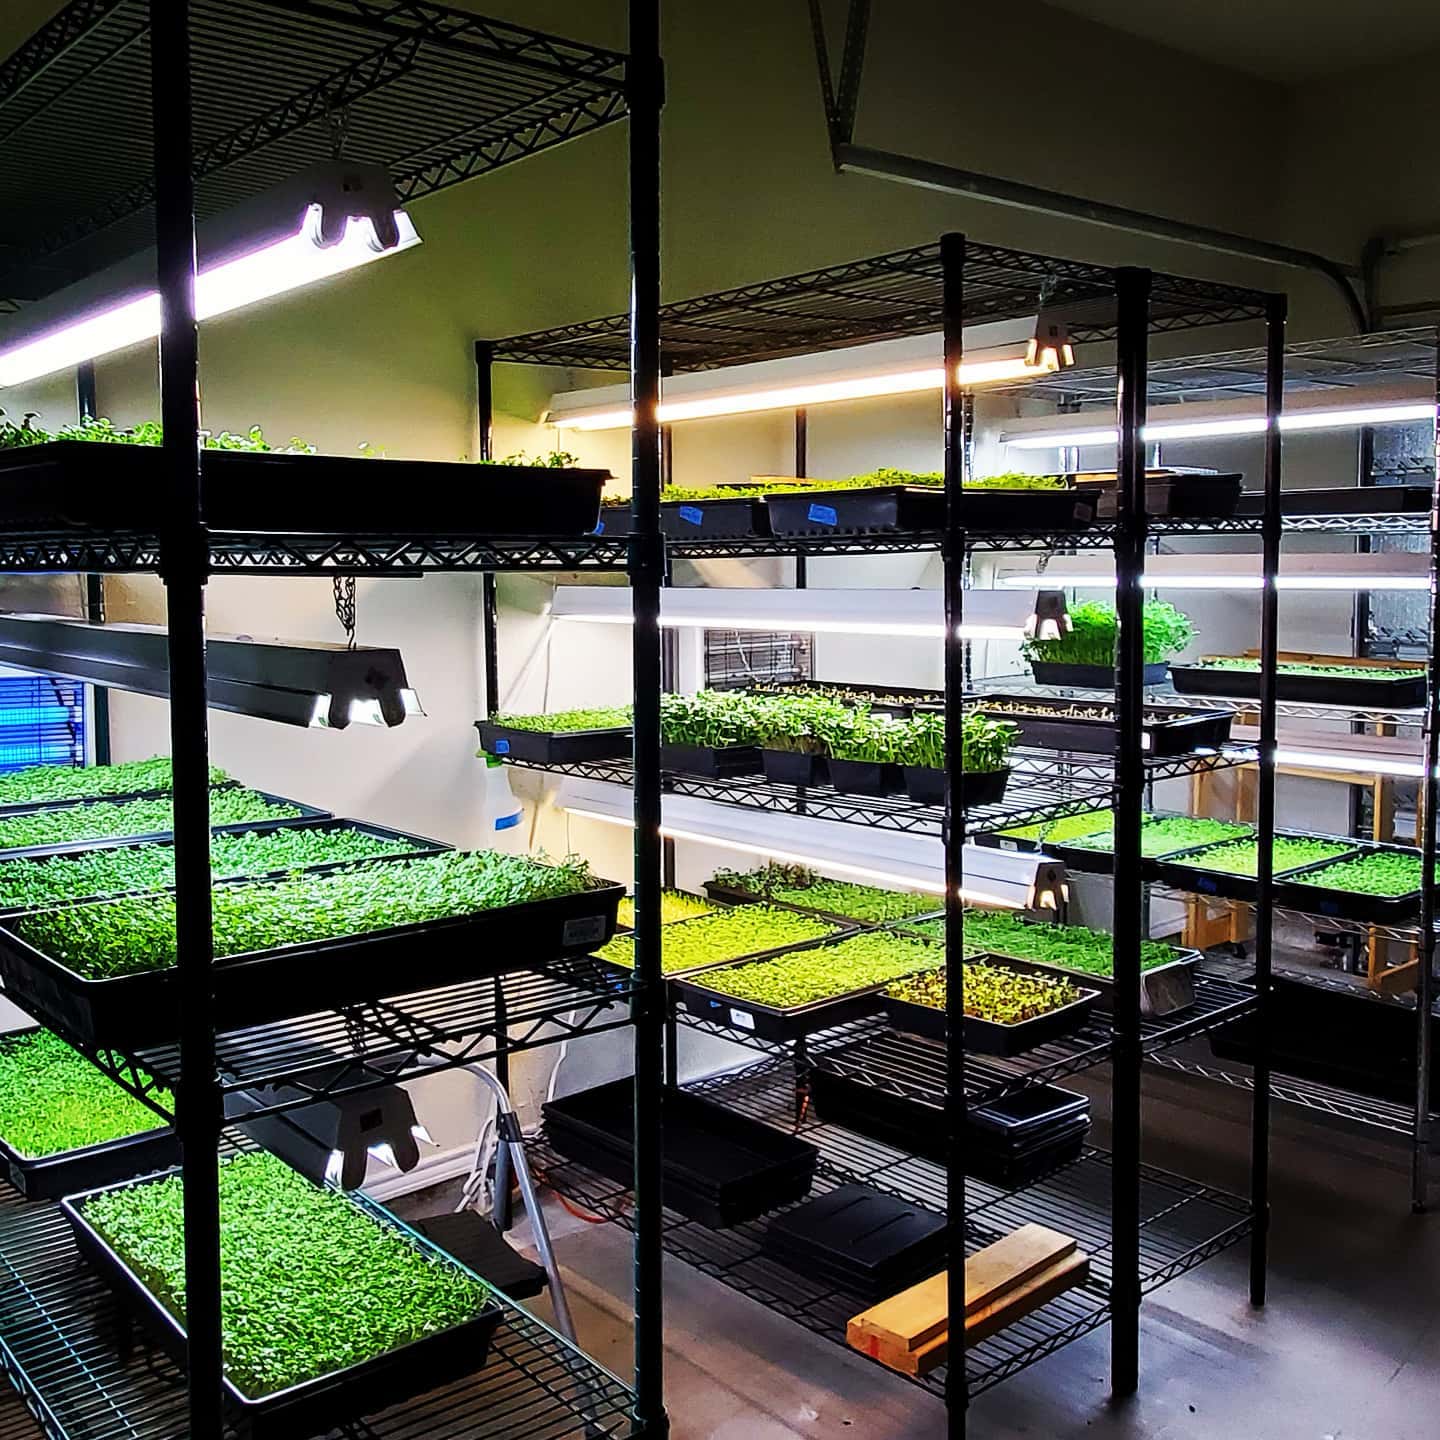 Eat Your Greens! Organic Farm: Redefining Small-Scale Suburban Farming